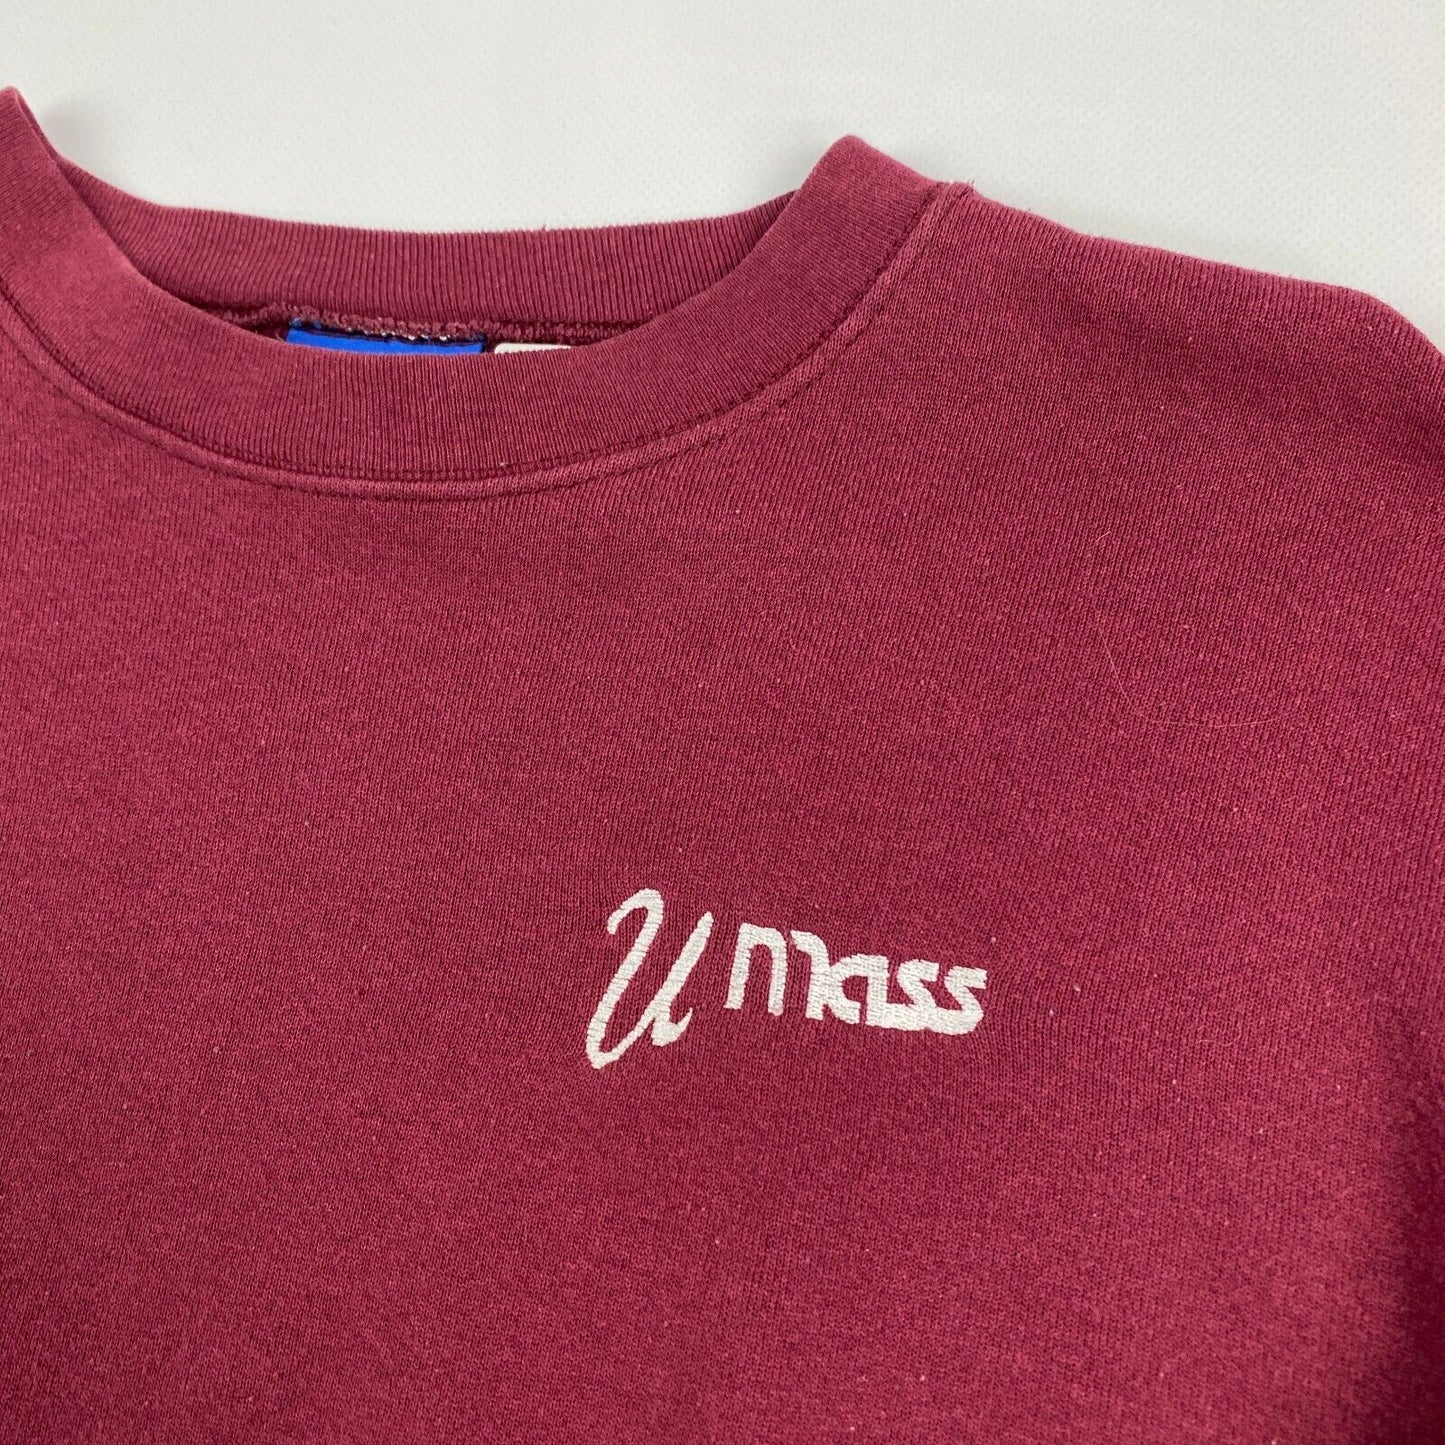 VINTAGE 90s UMASS Sm Logo Maroon Red Crewneck Sweater sz Medium Men